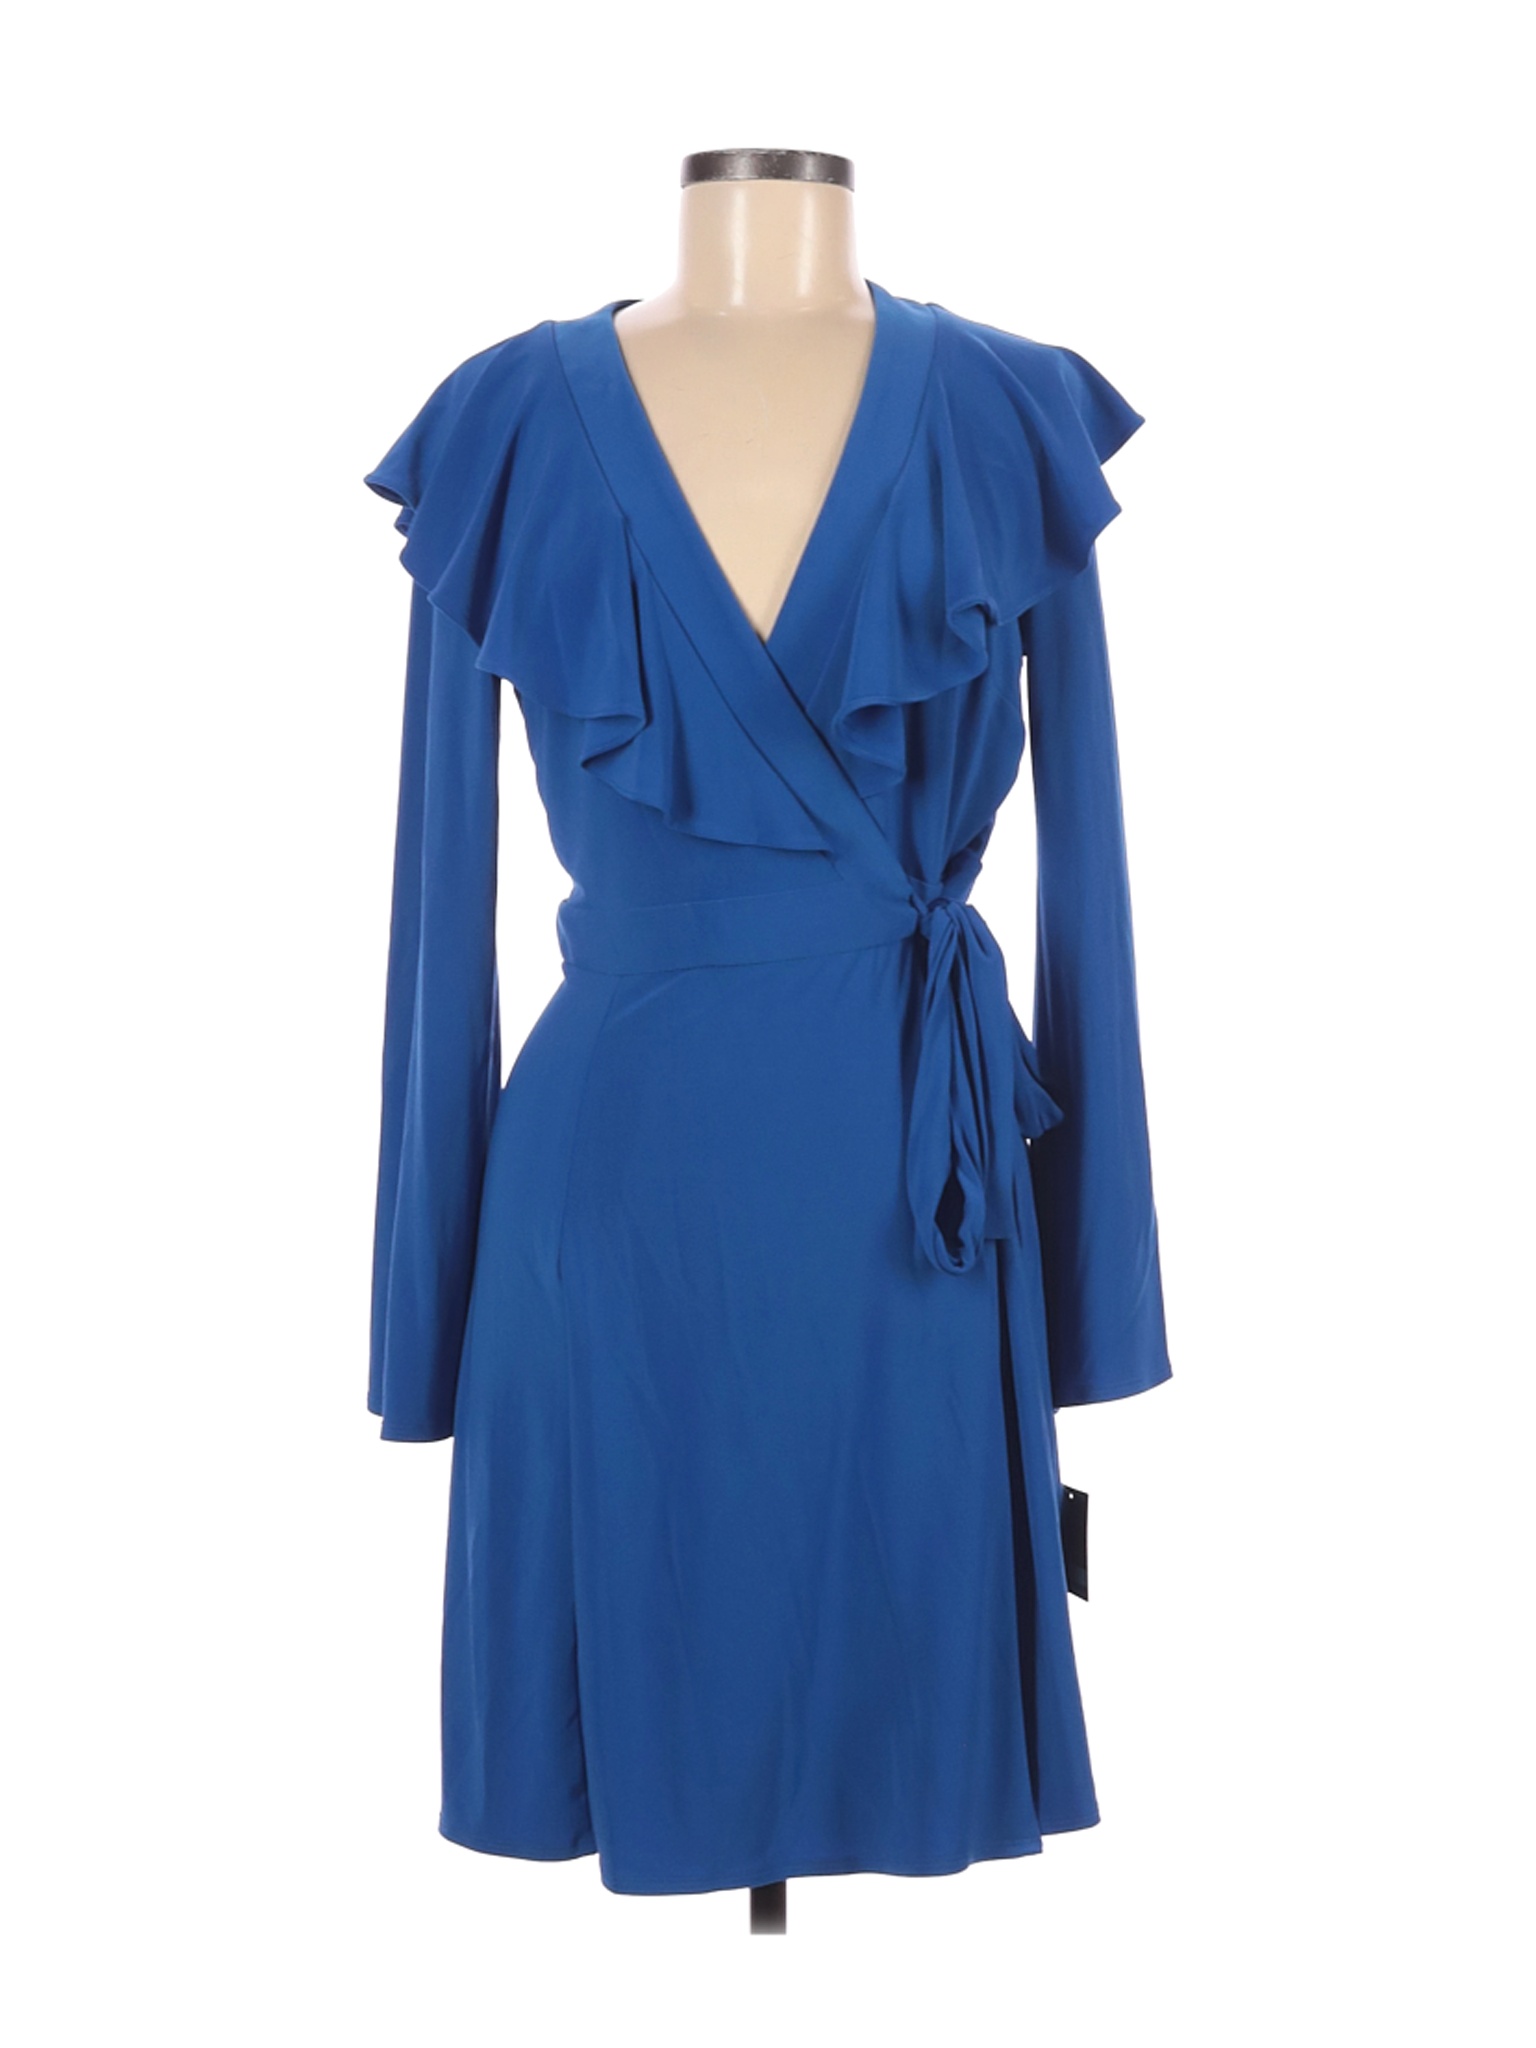 NWT Just... Taylor Women Blue Casual Dress 8 | eBay